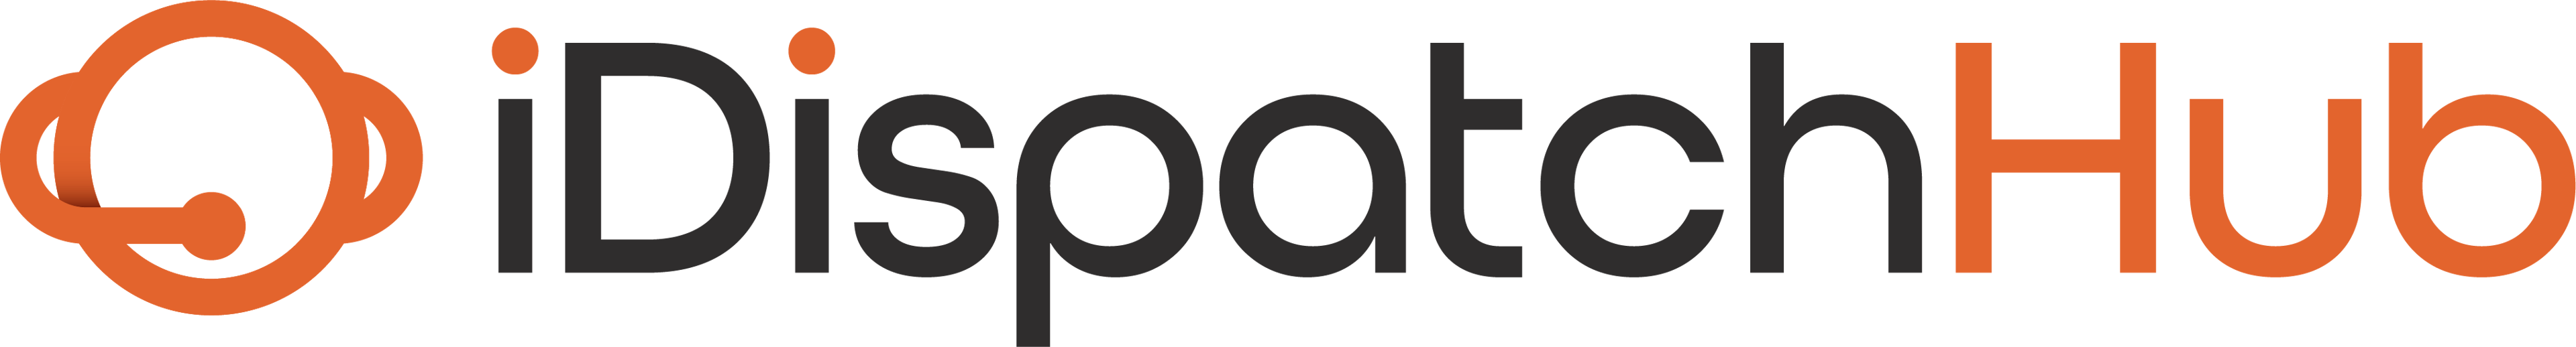 Innovative Logistics Group logo